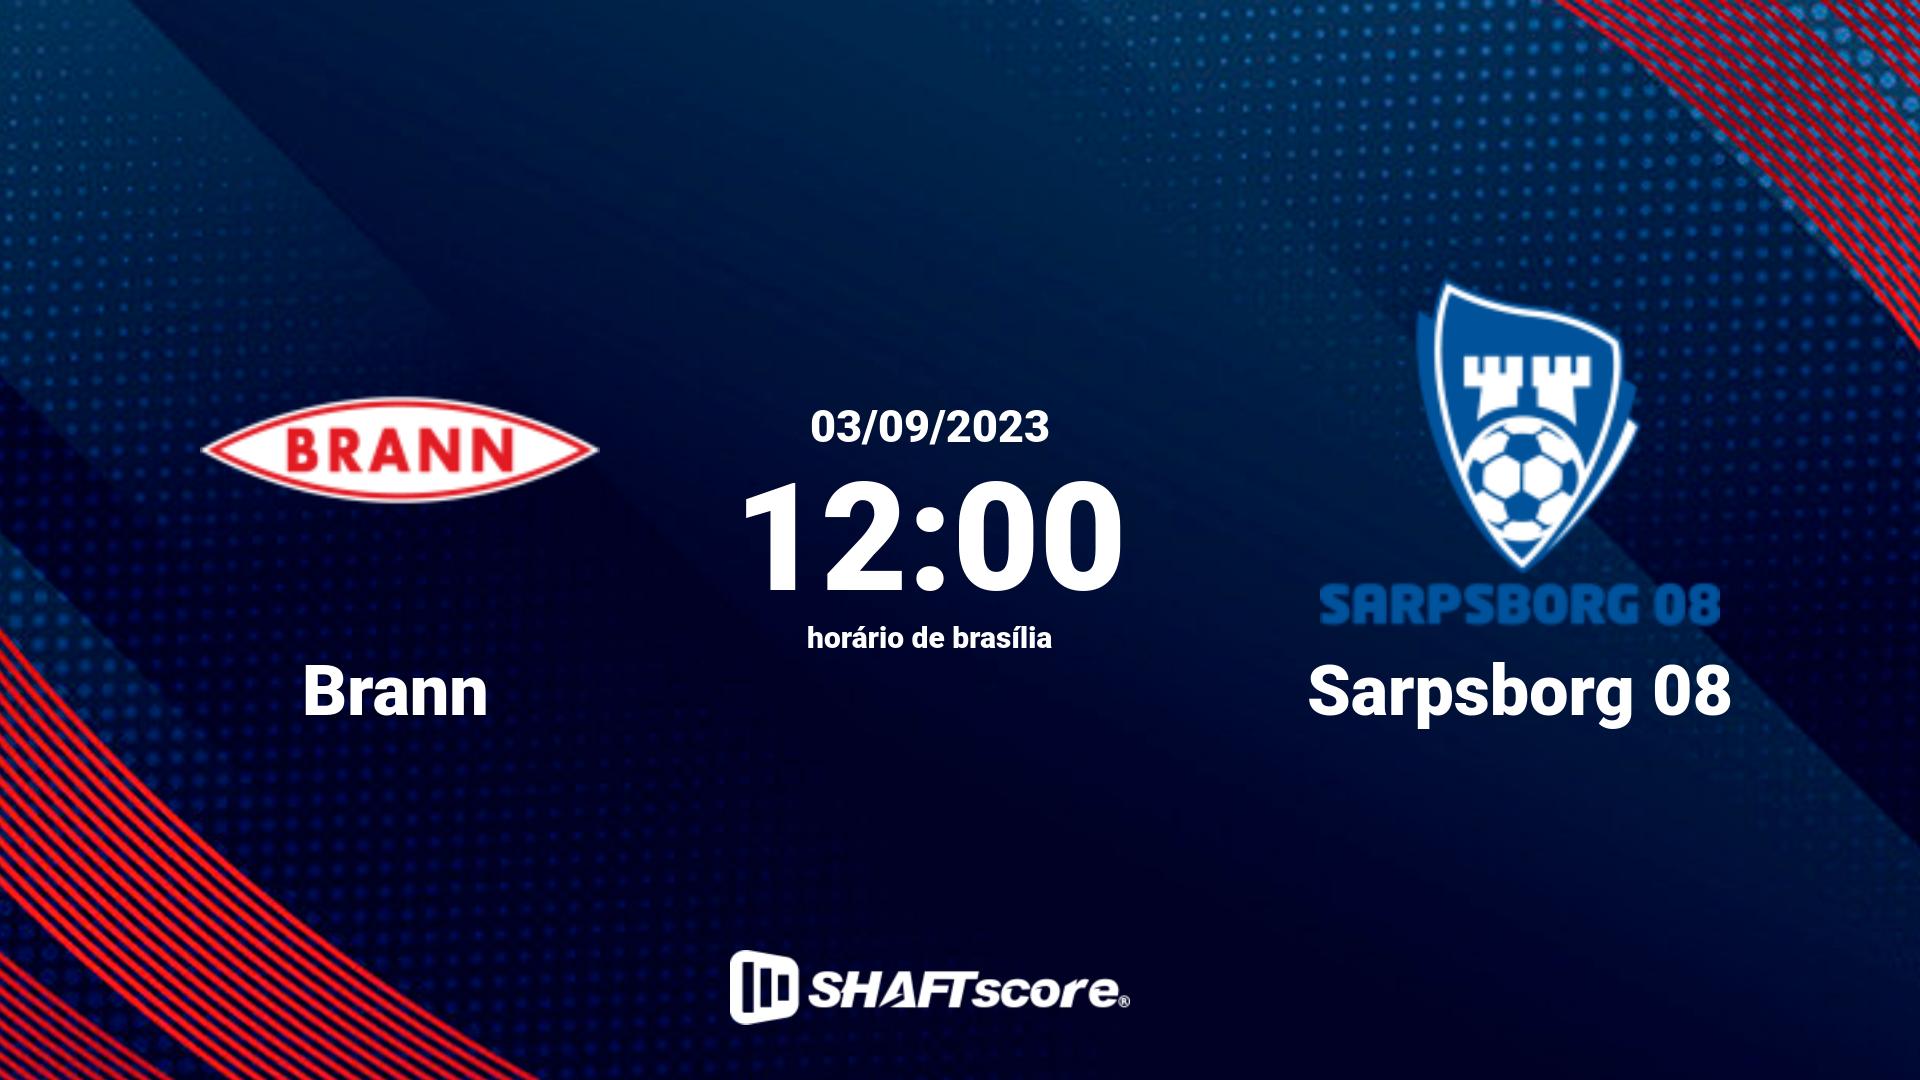 Estatísticas do jogo Brann vs Sarpsborg 08 03.09 12:00